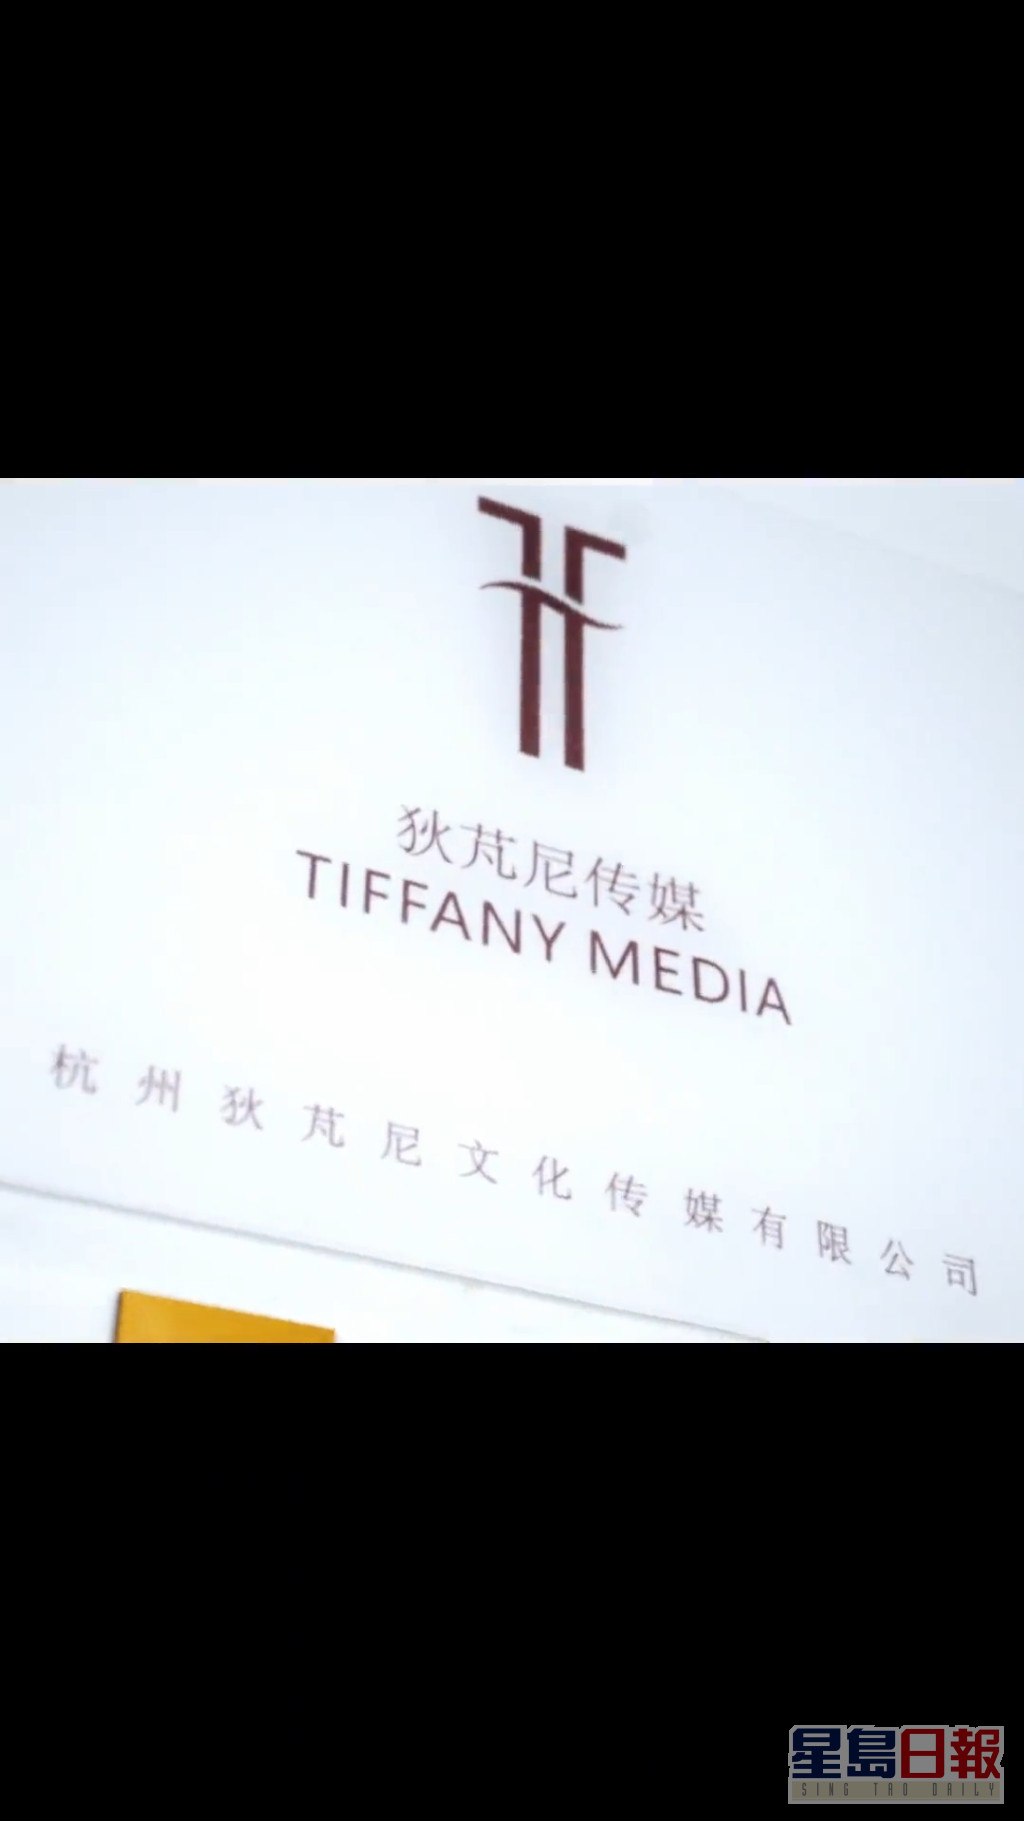 向太公司叫Tiffany Media，取自向太的英文名。